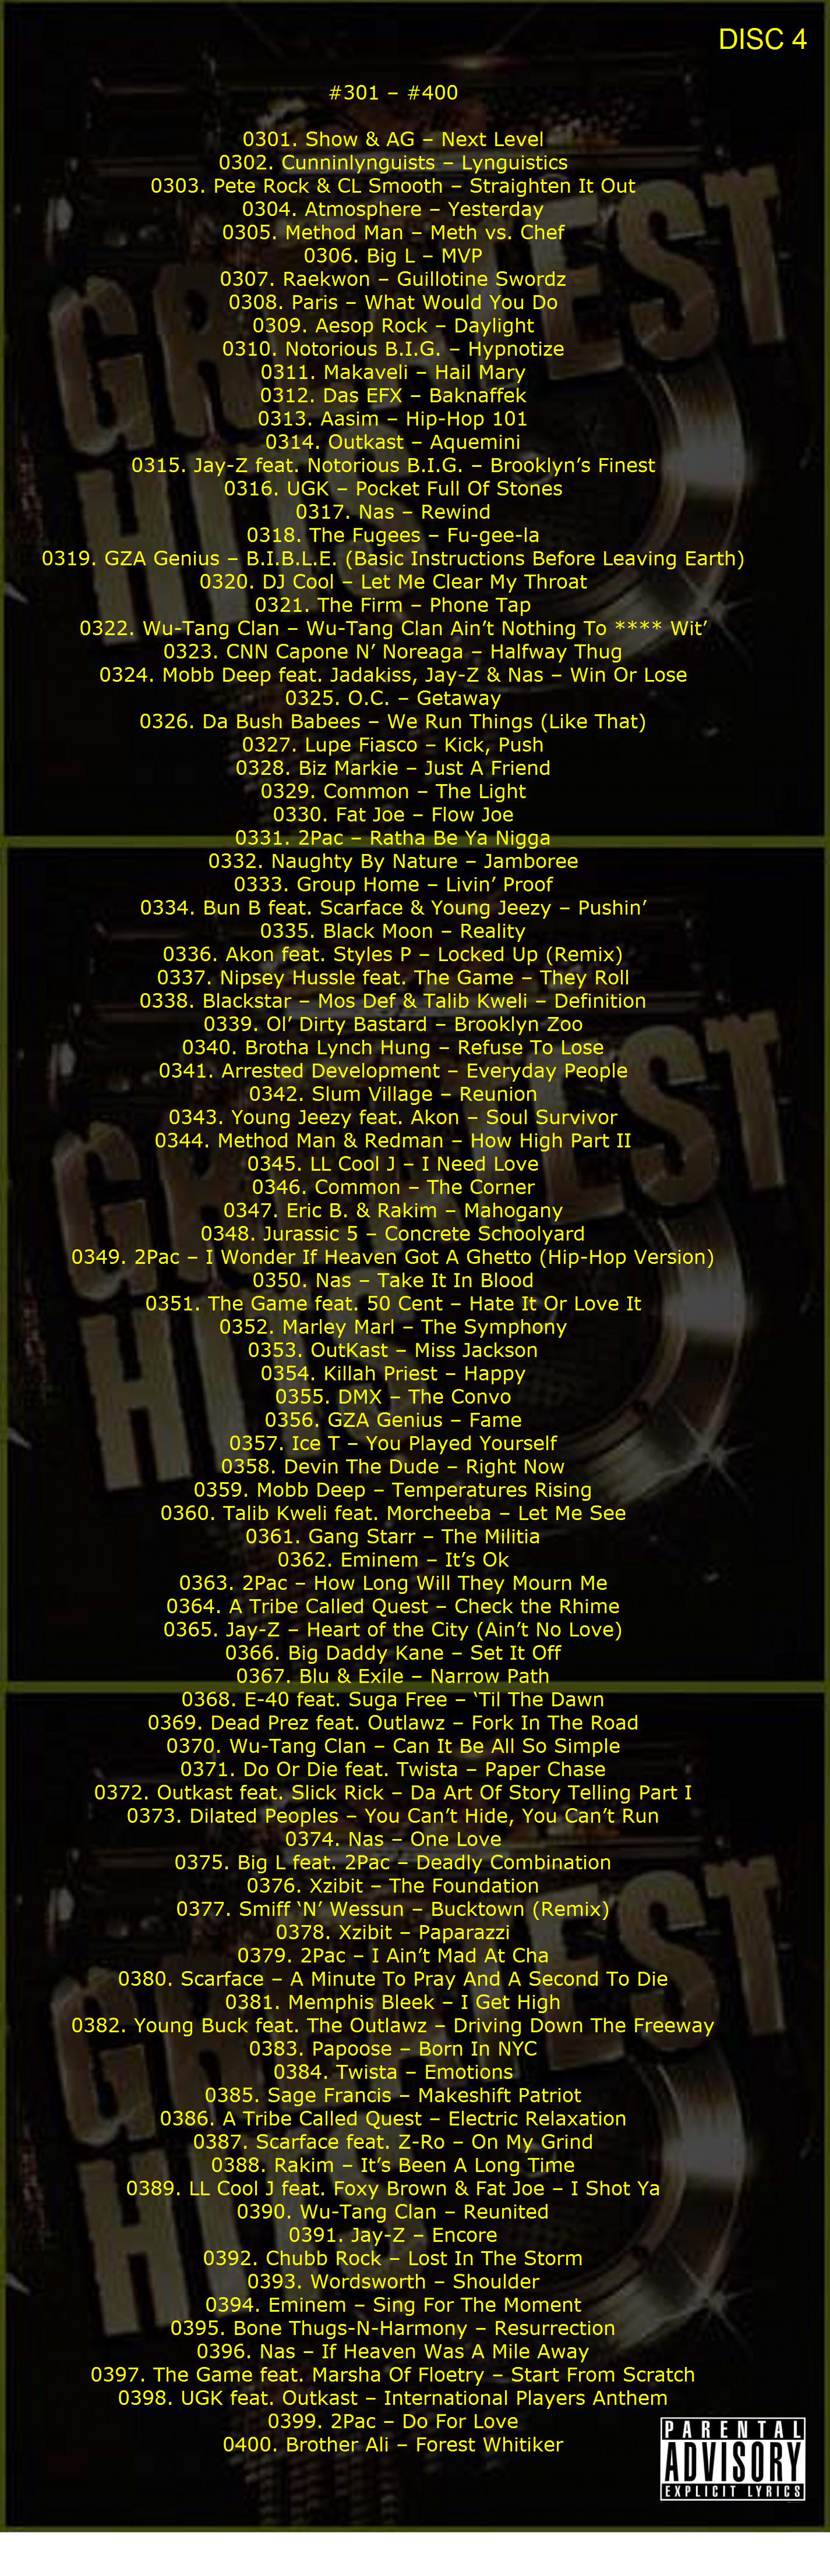 TOP 1000 VARIOUS ARTISTS - GREATEST HITS VOL 1 (5) DISC SET (CD LP) c1980-